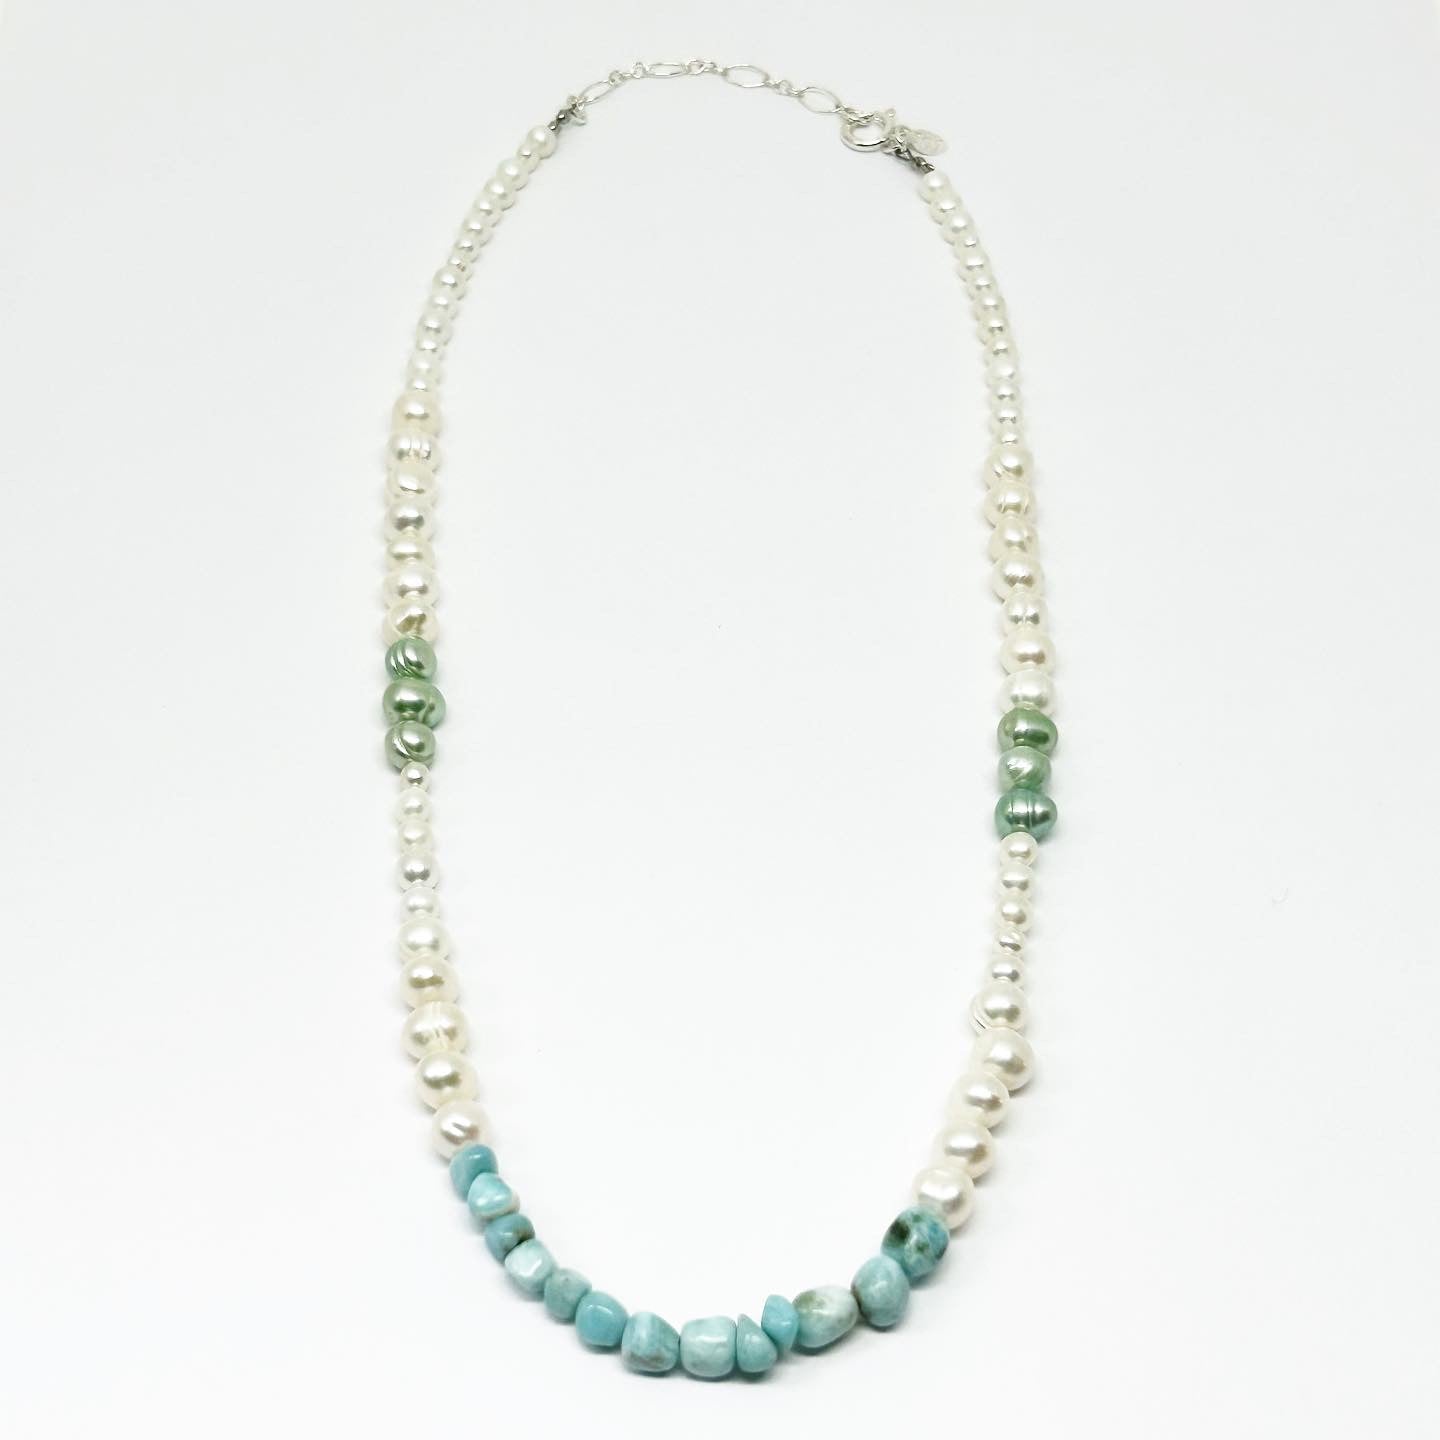 Larimar and Pearls Necklace #101 - Jennifer Cervelli Jewelry